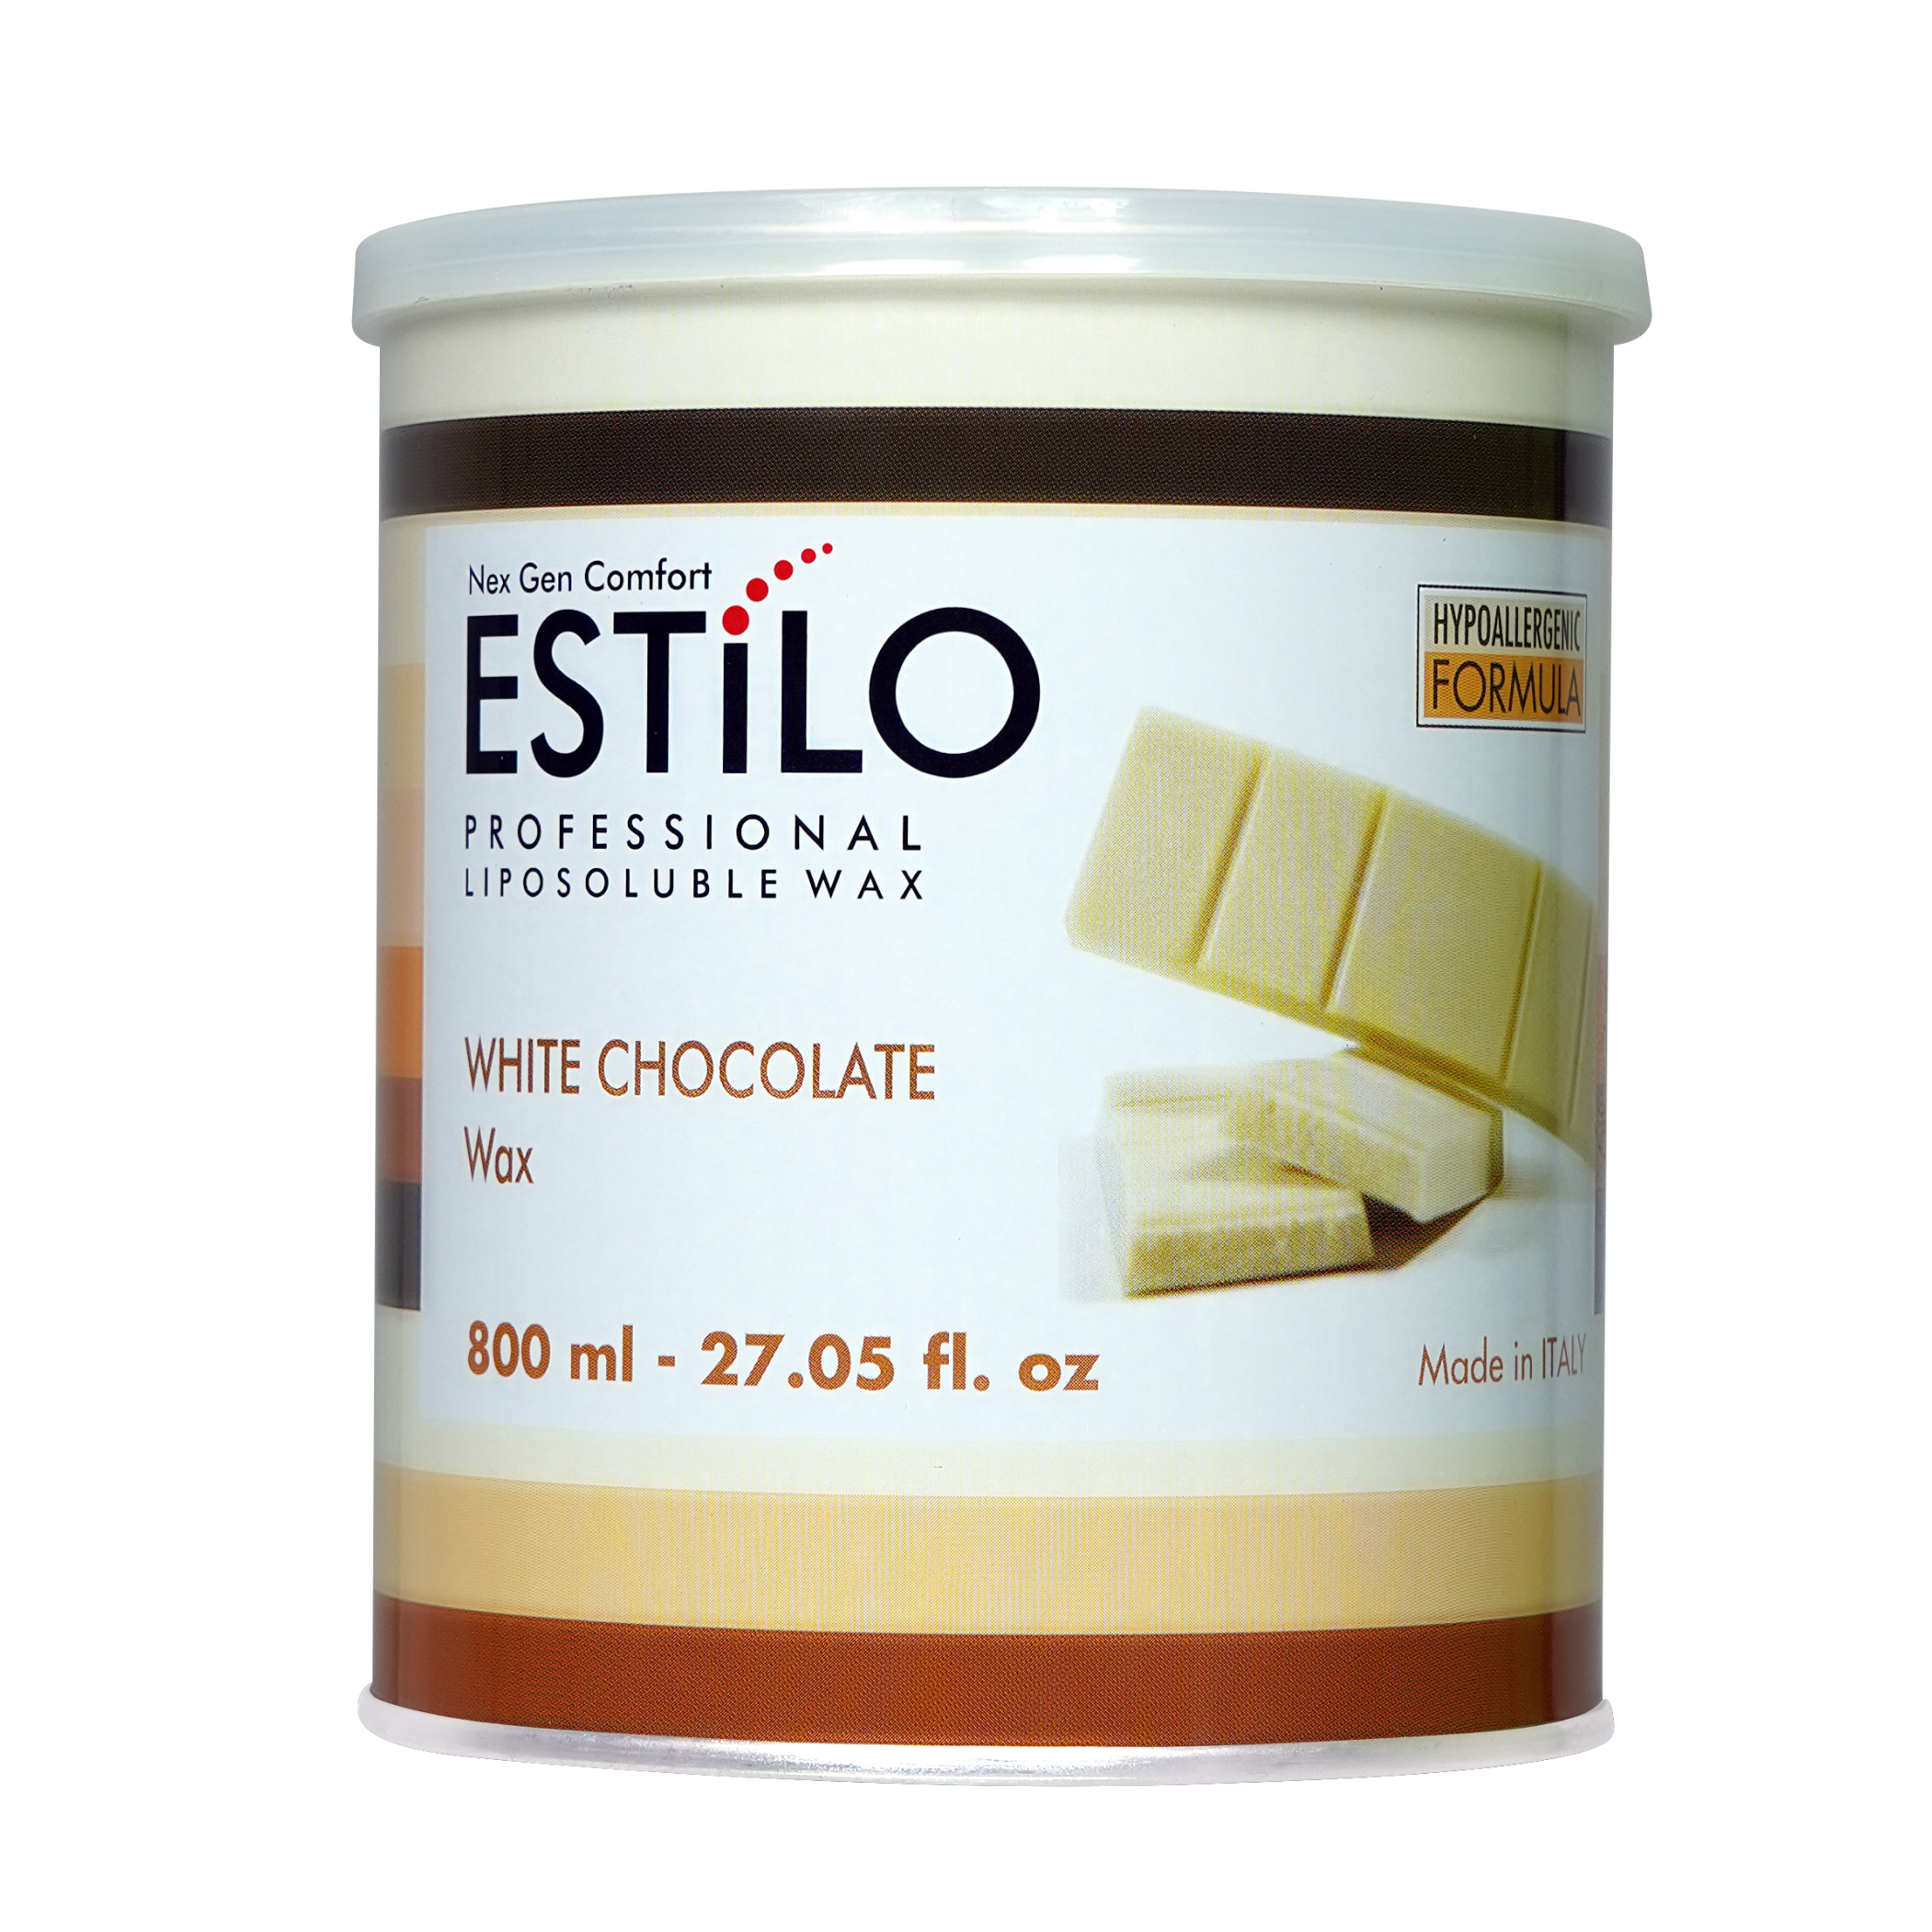 Estilo white chocolate wax liposoluble